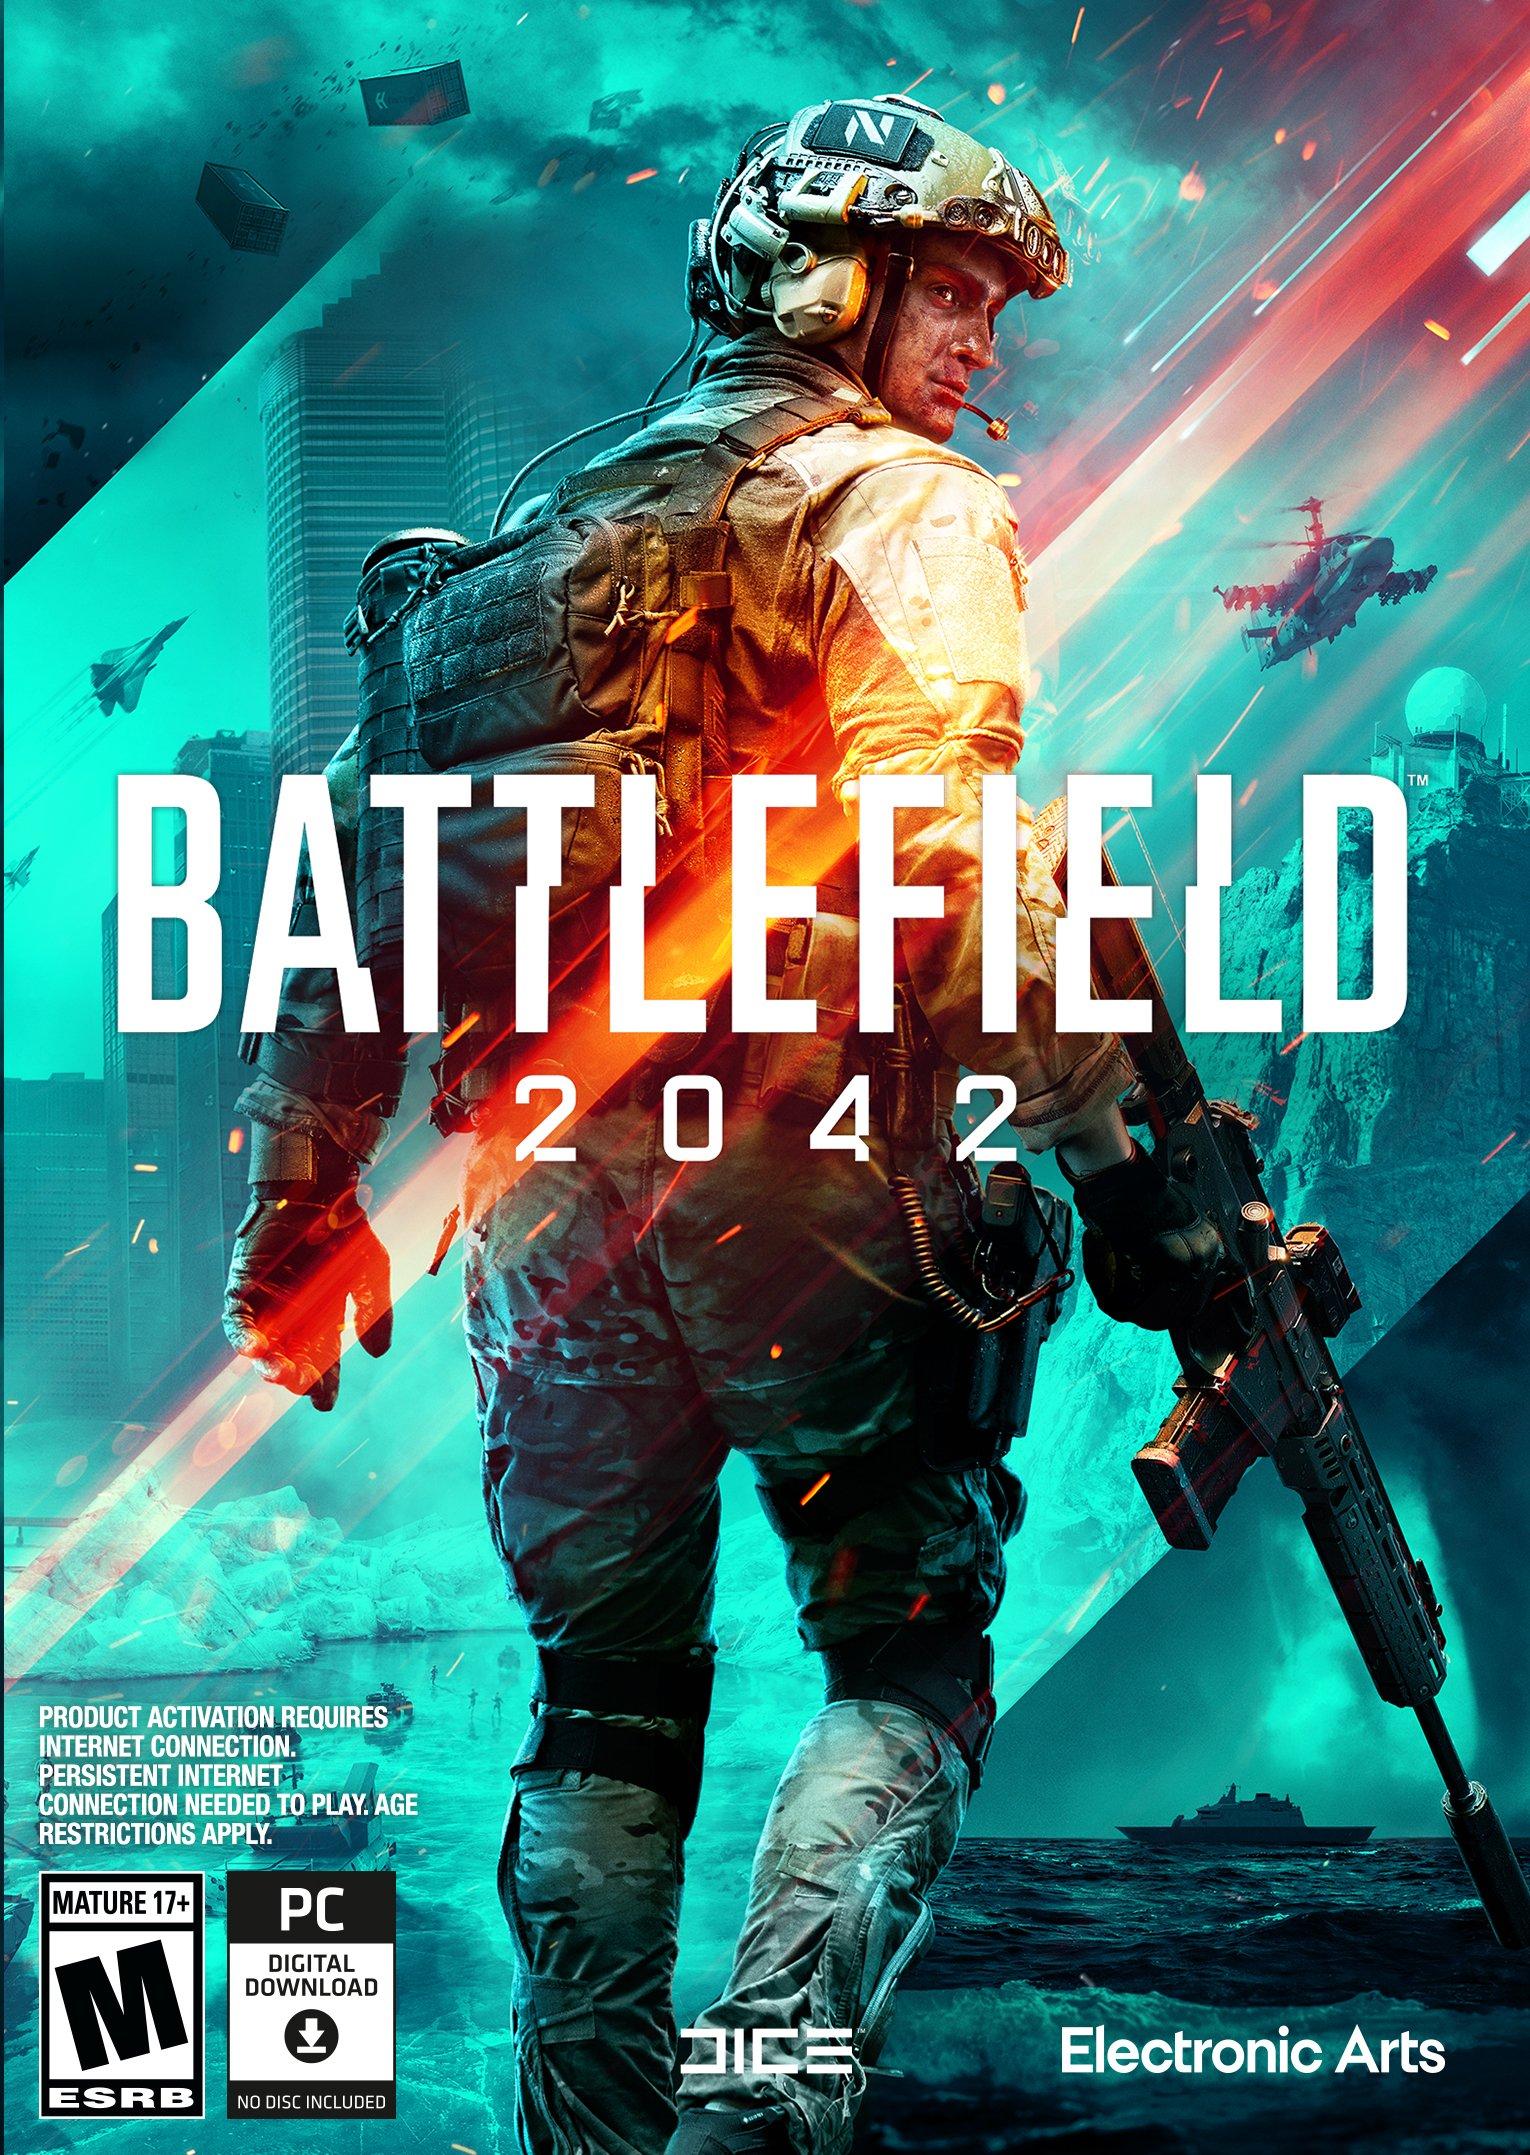 Battlefield 2042 - New Look At Battlefield Portal Gameplay